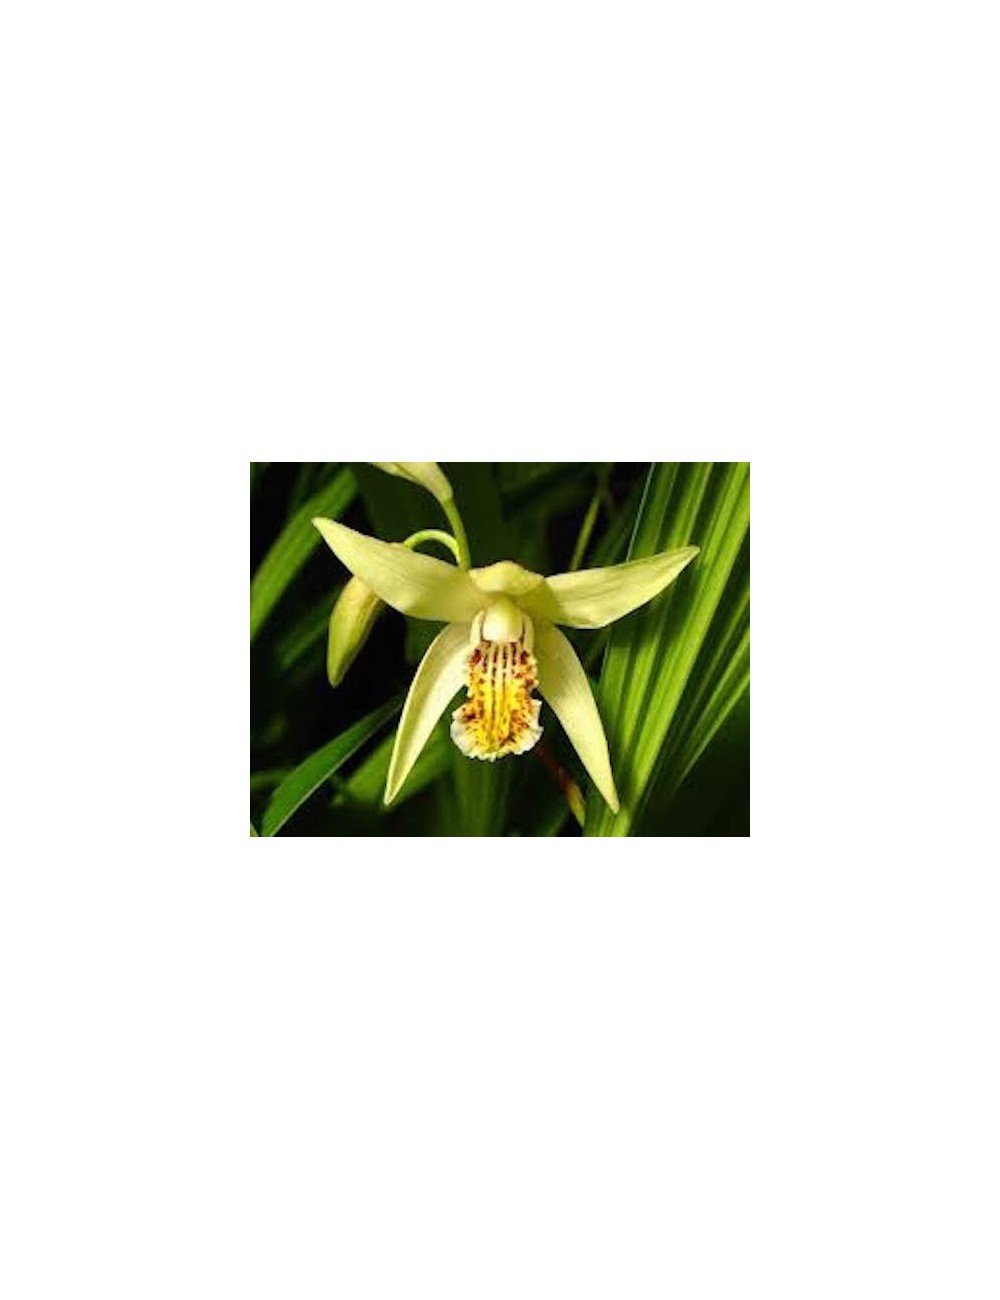 Bletilla striata yellow river - orchidea da giardino